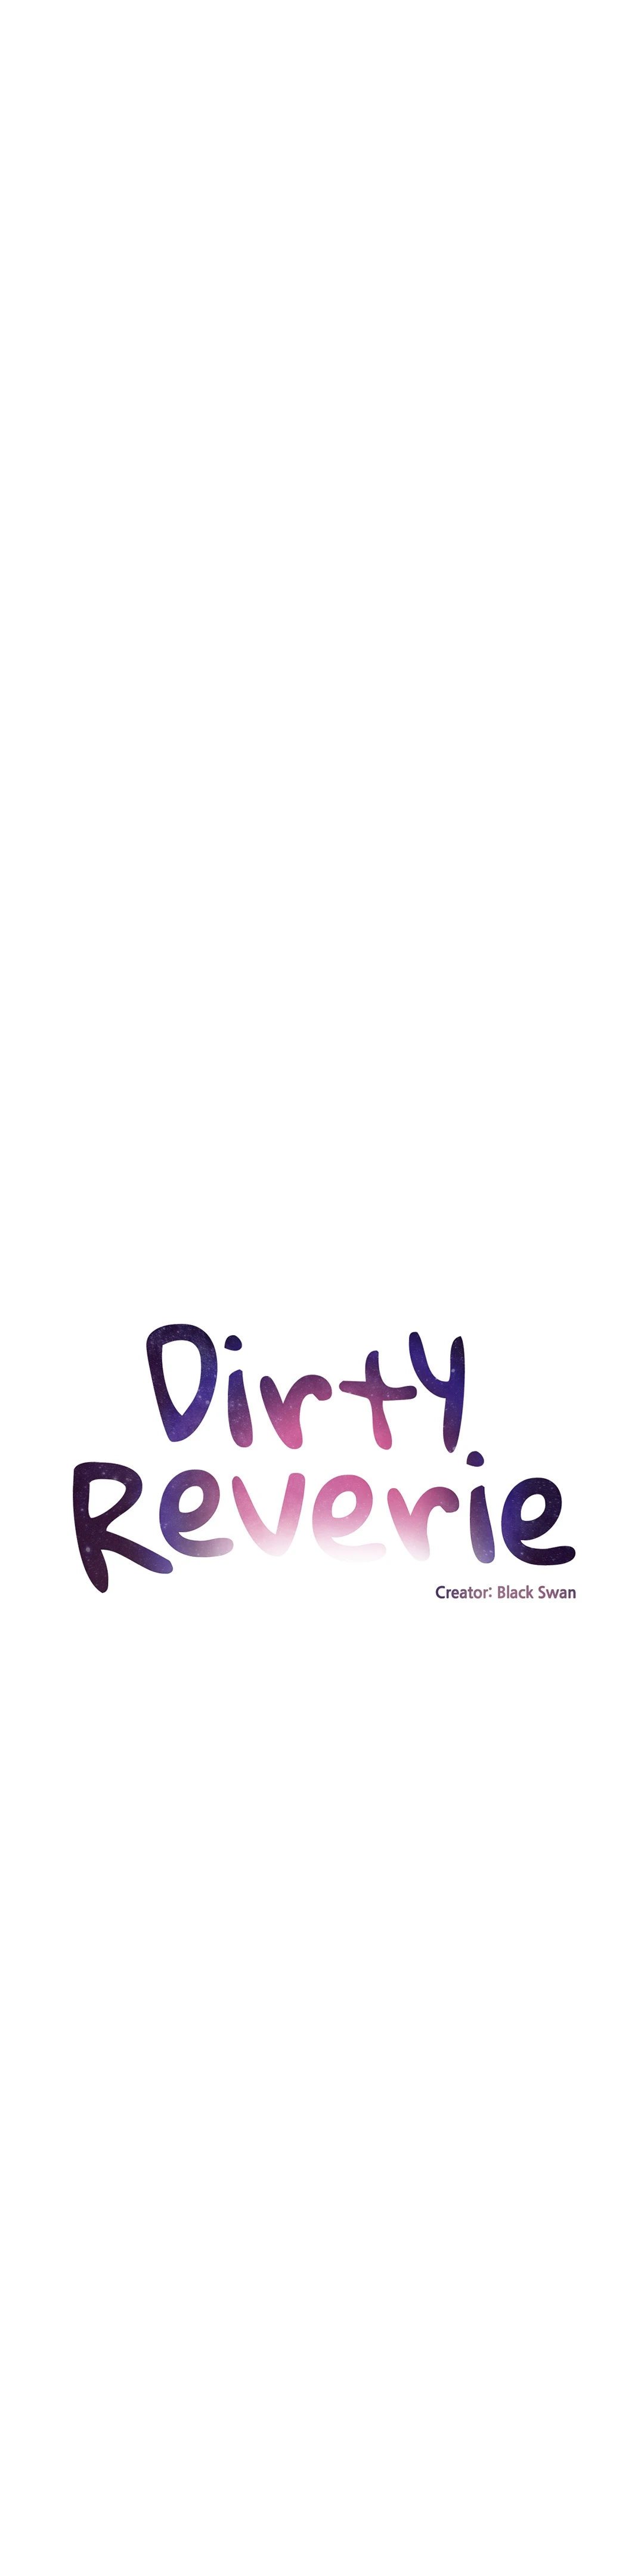 dirty-reverie-chap-6-0